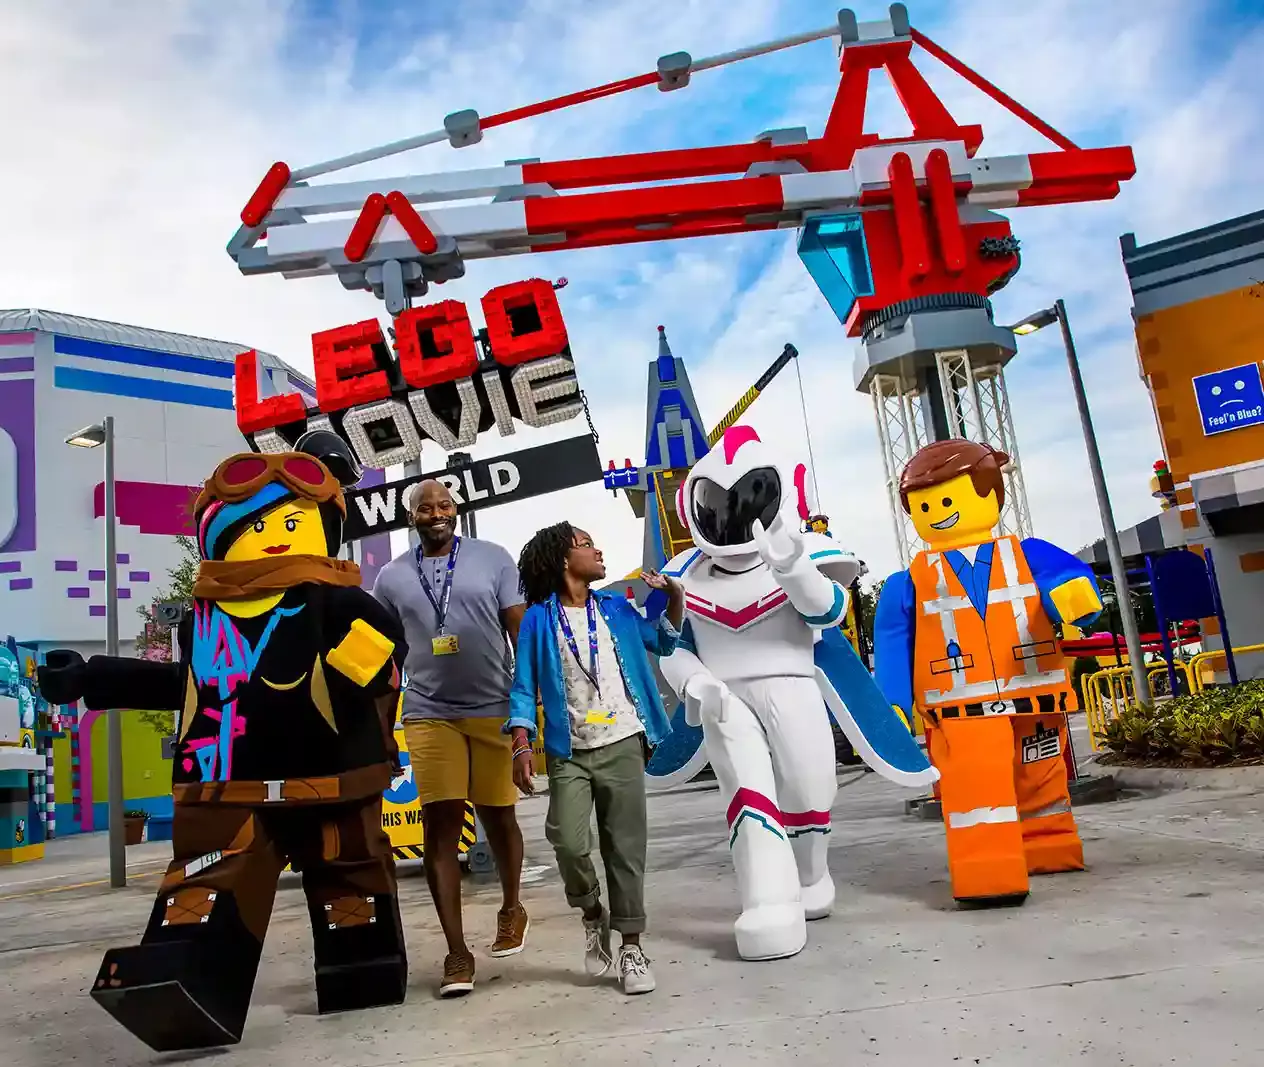 Lego Movie World - Legoland California